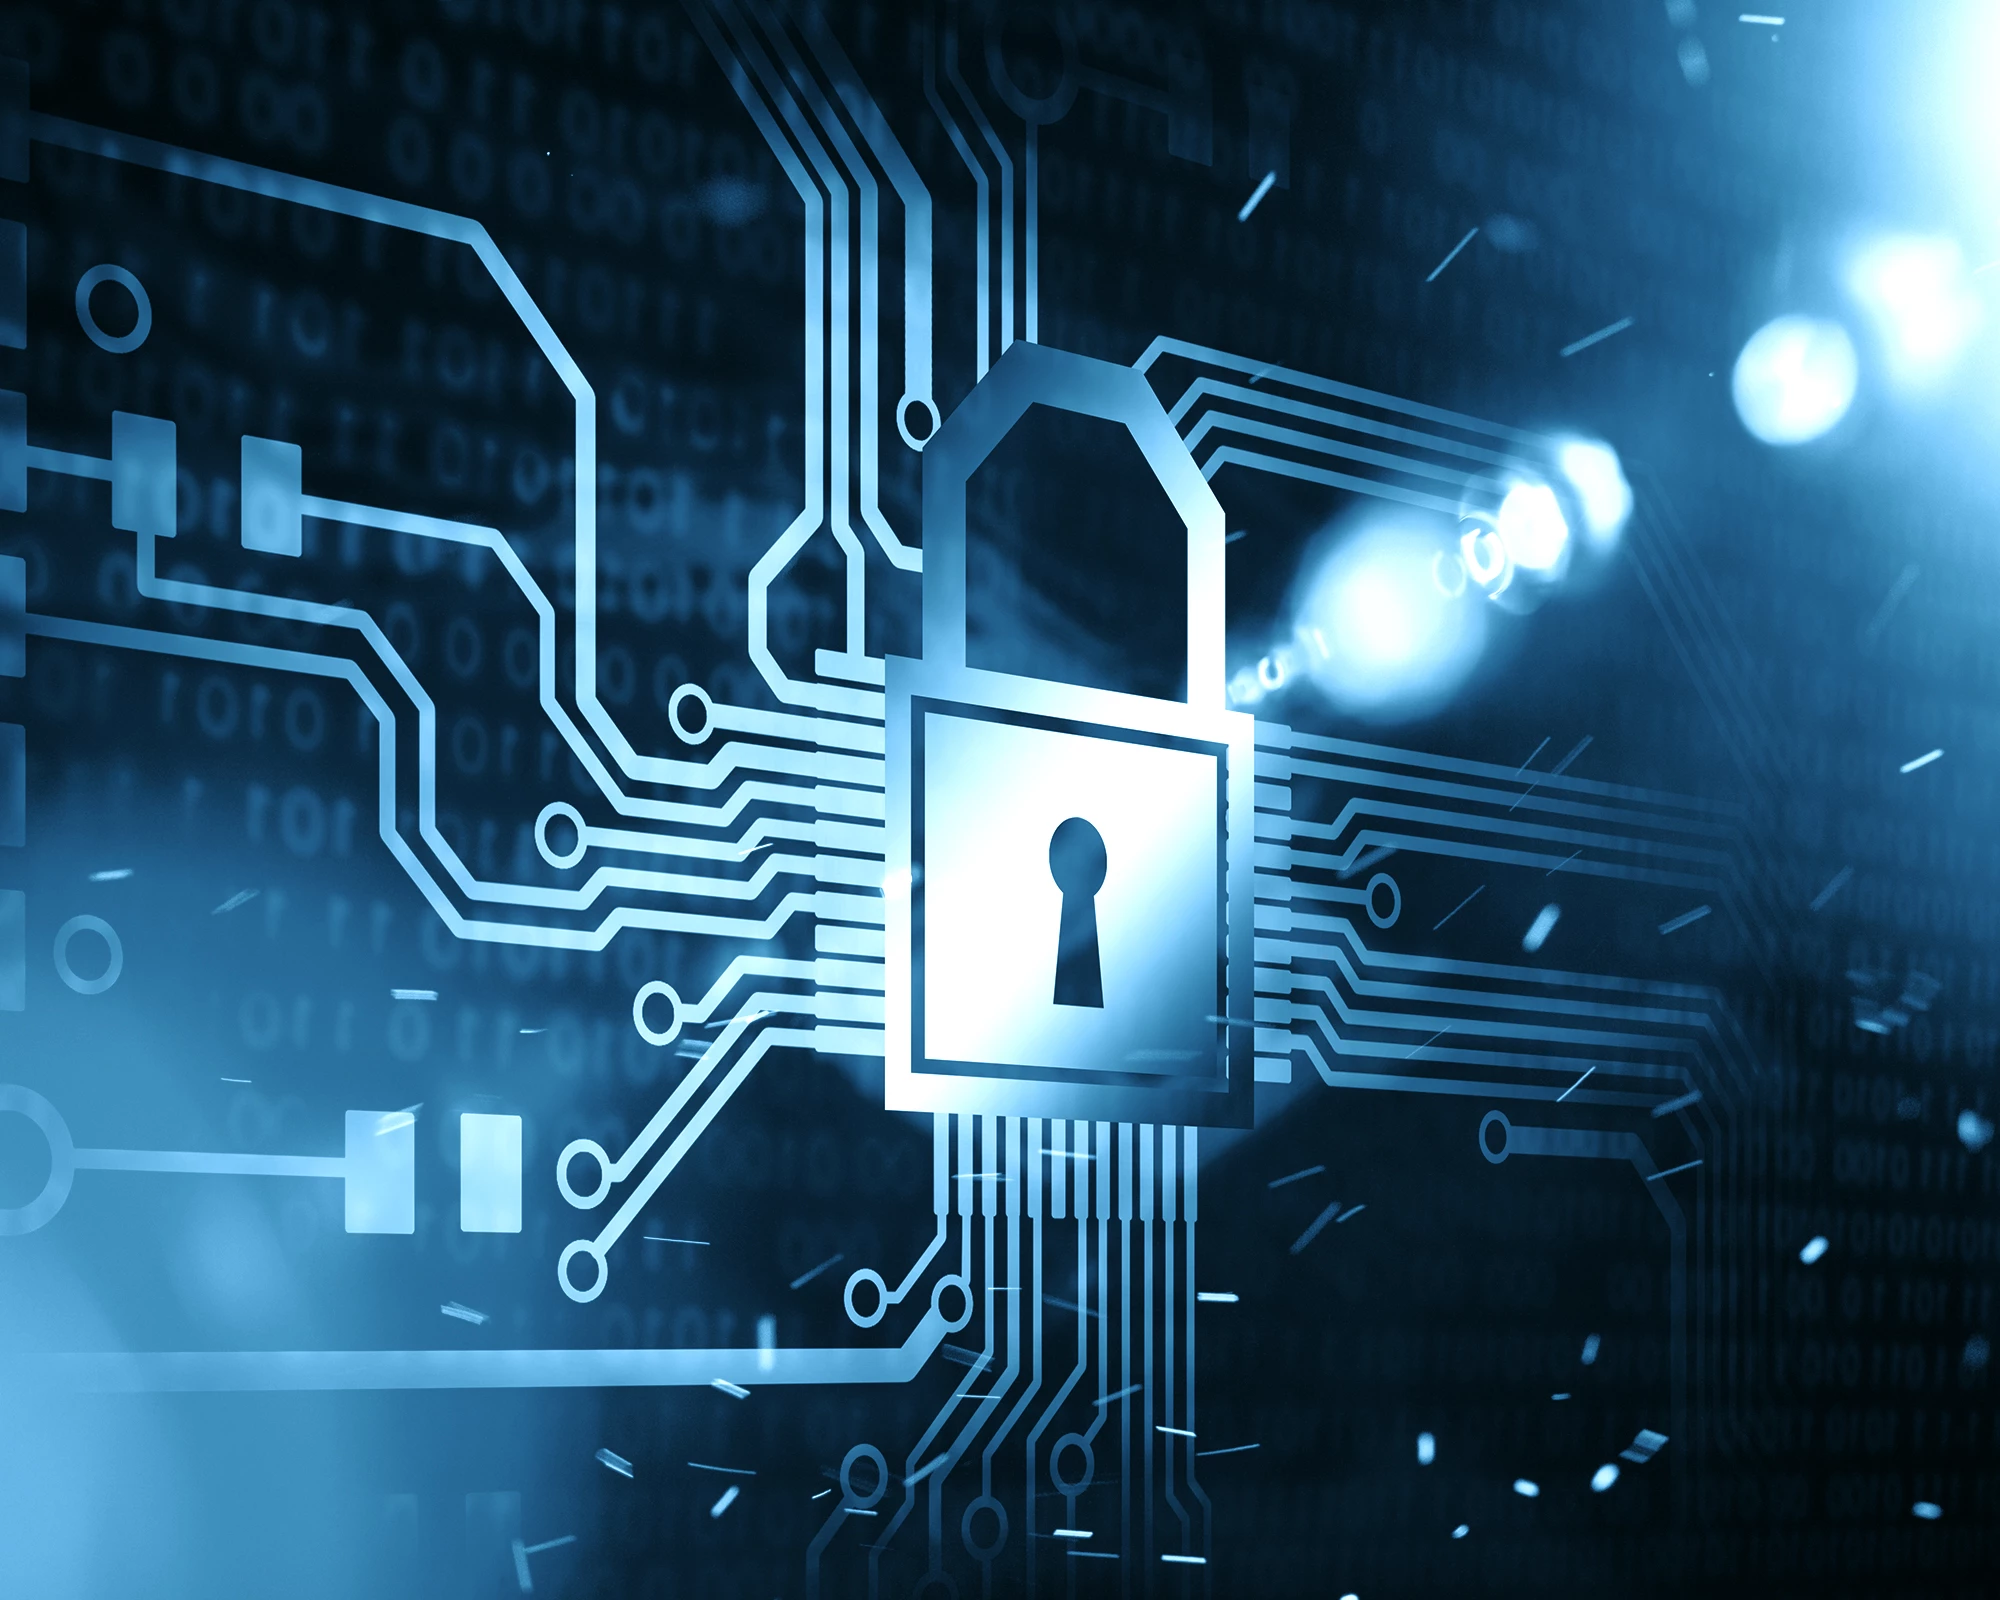 Internet Security Padlock for VPN & Online Privacy